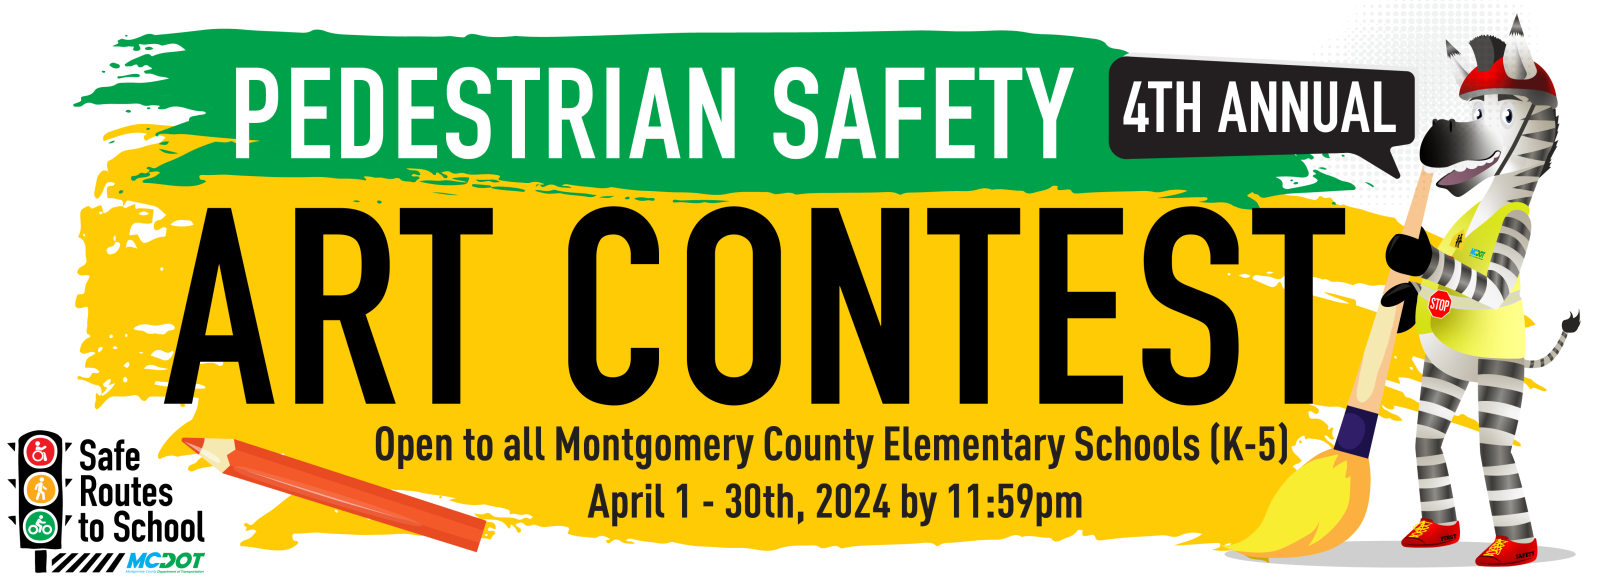 Pedestrian Safety - Art Contest March 1 through 10th